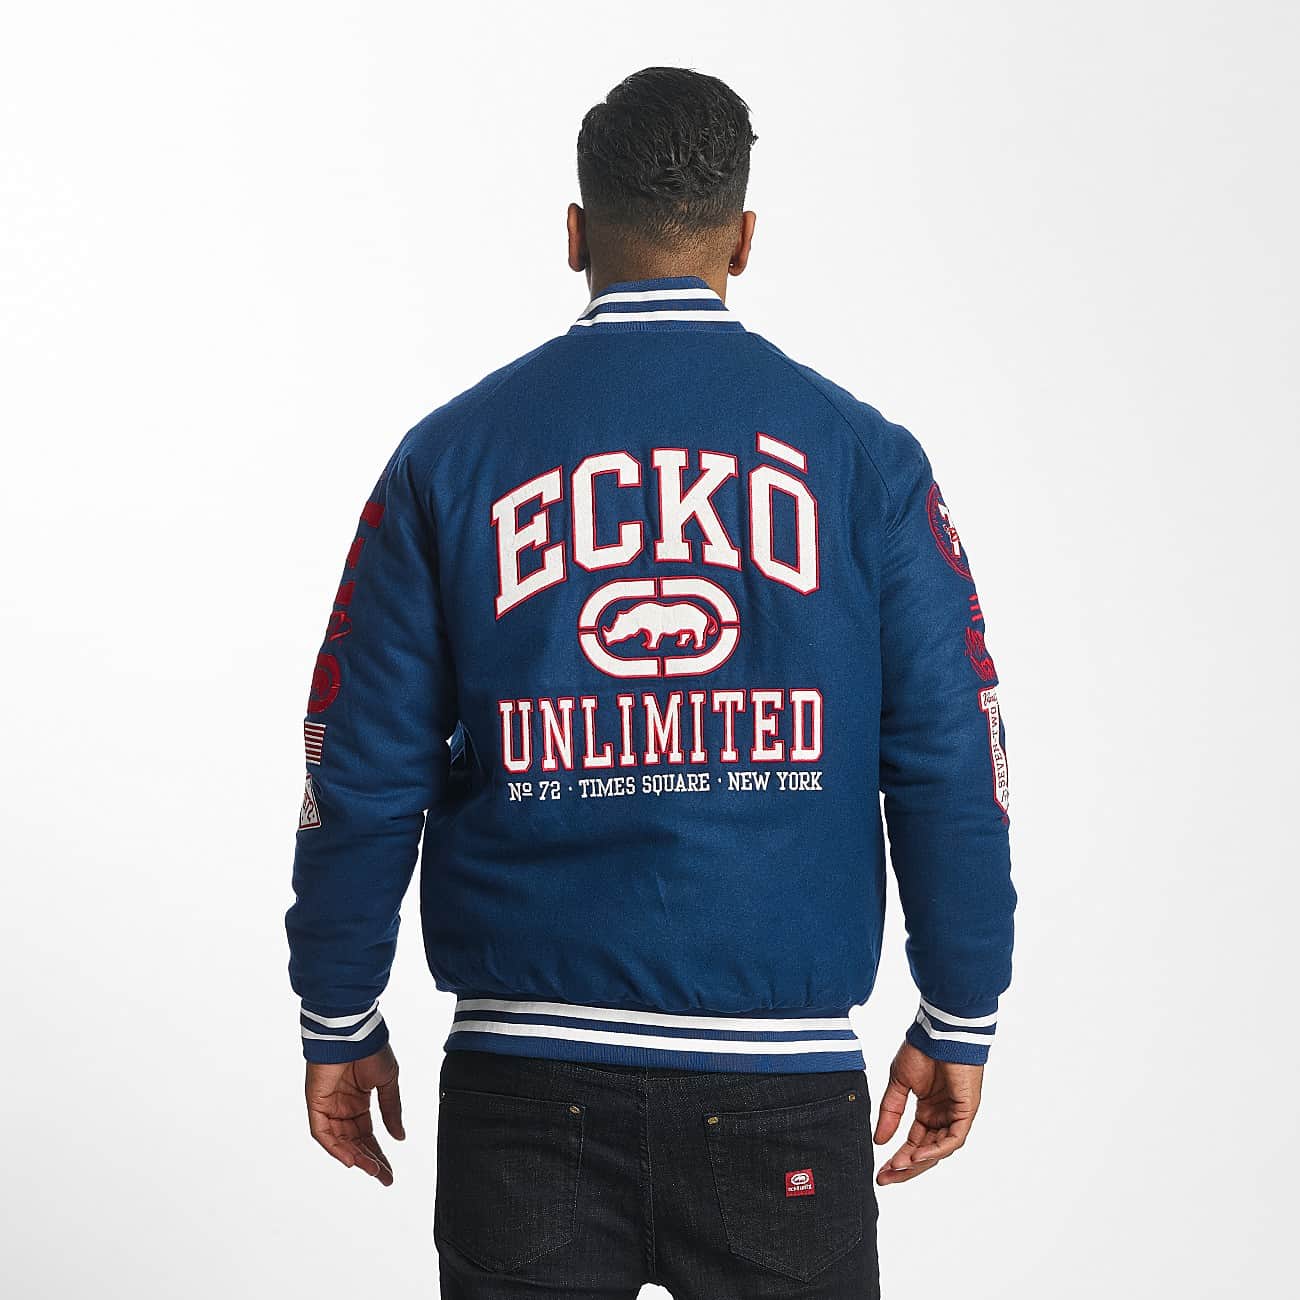 Ecko Unltd Logo - ECKO UNLTD BIG LOGO JACKET BLUE HOP SHOP